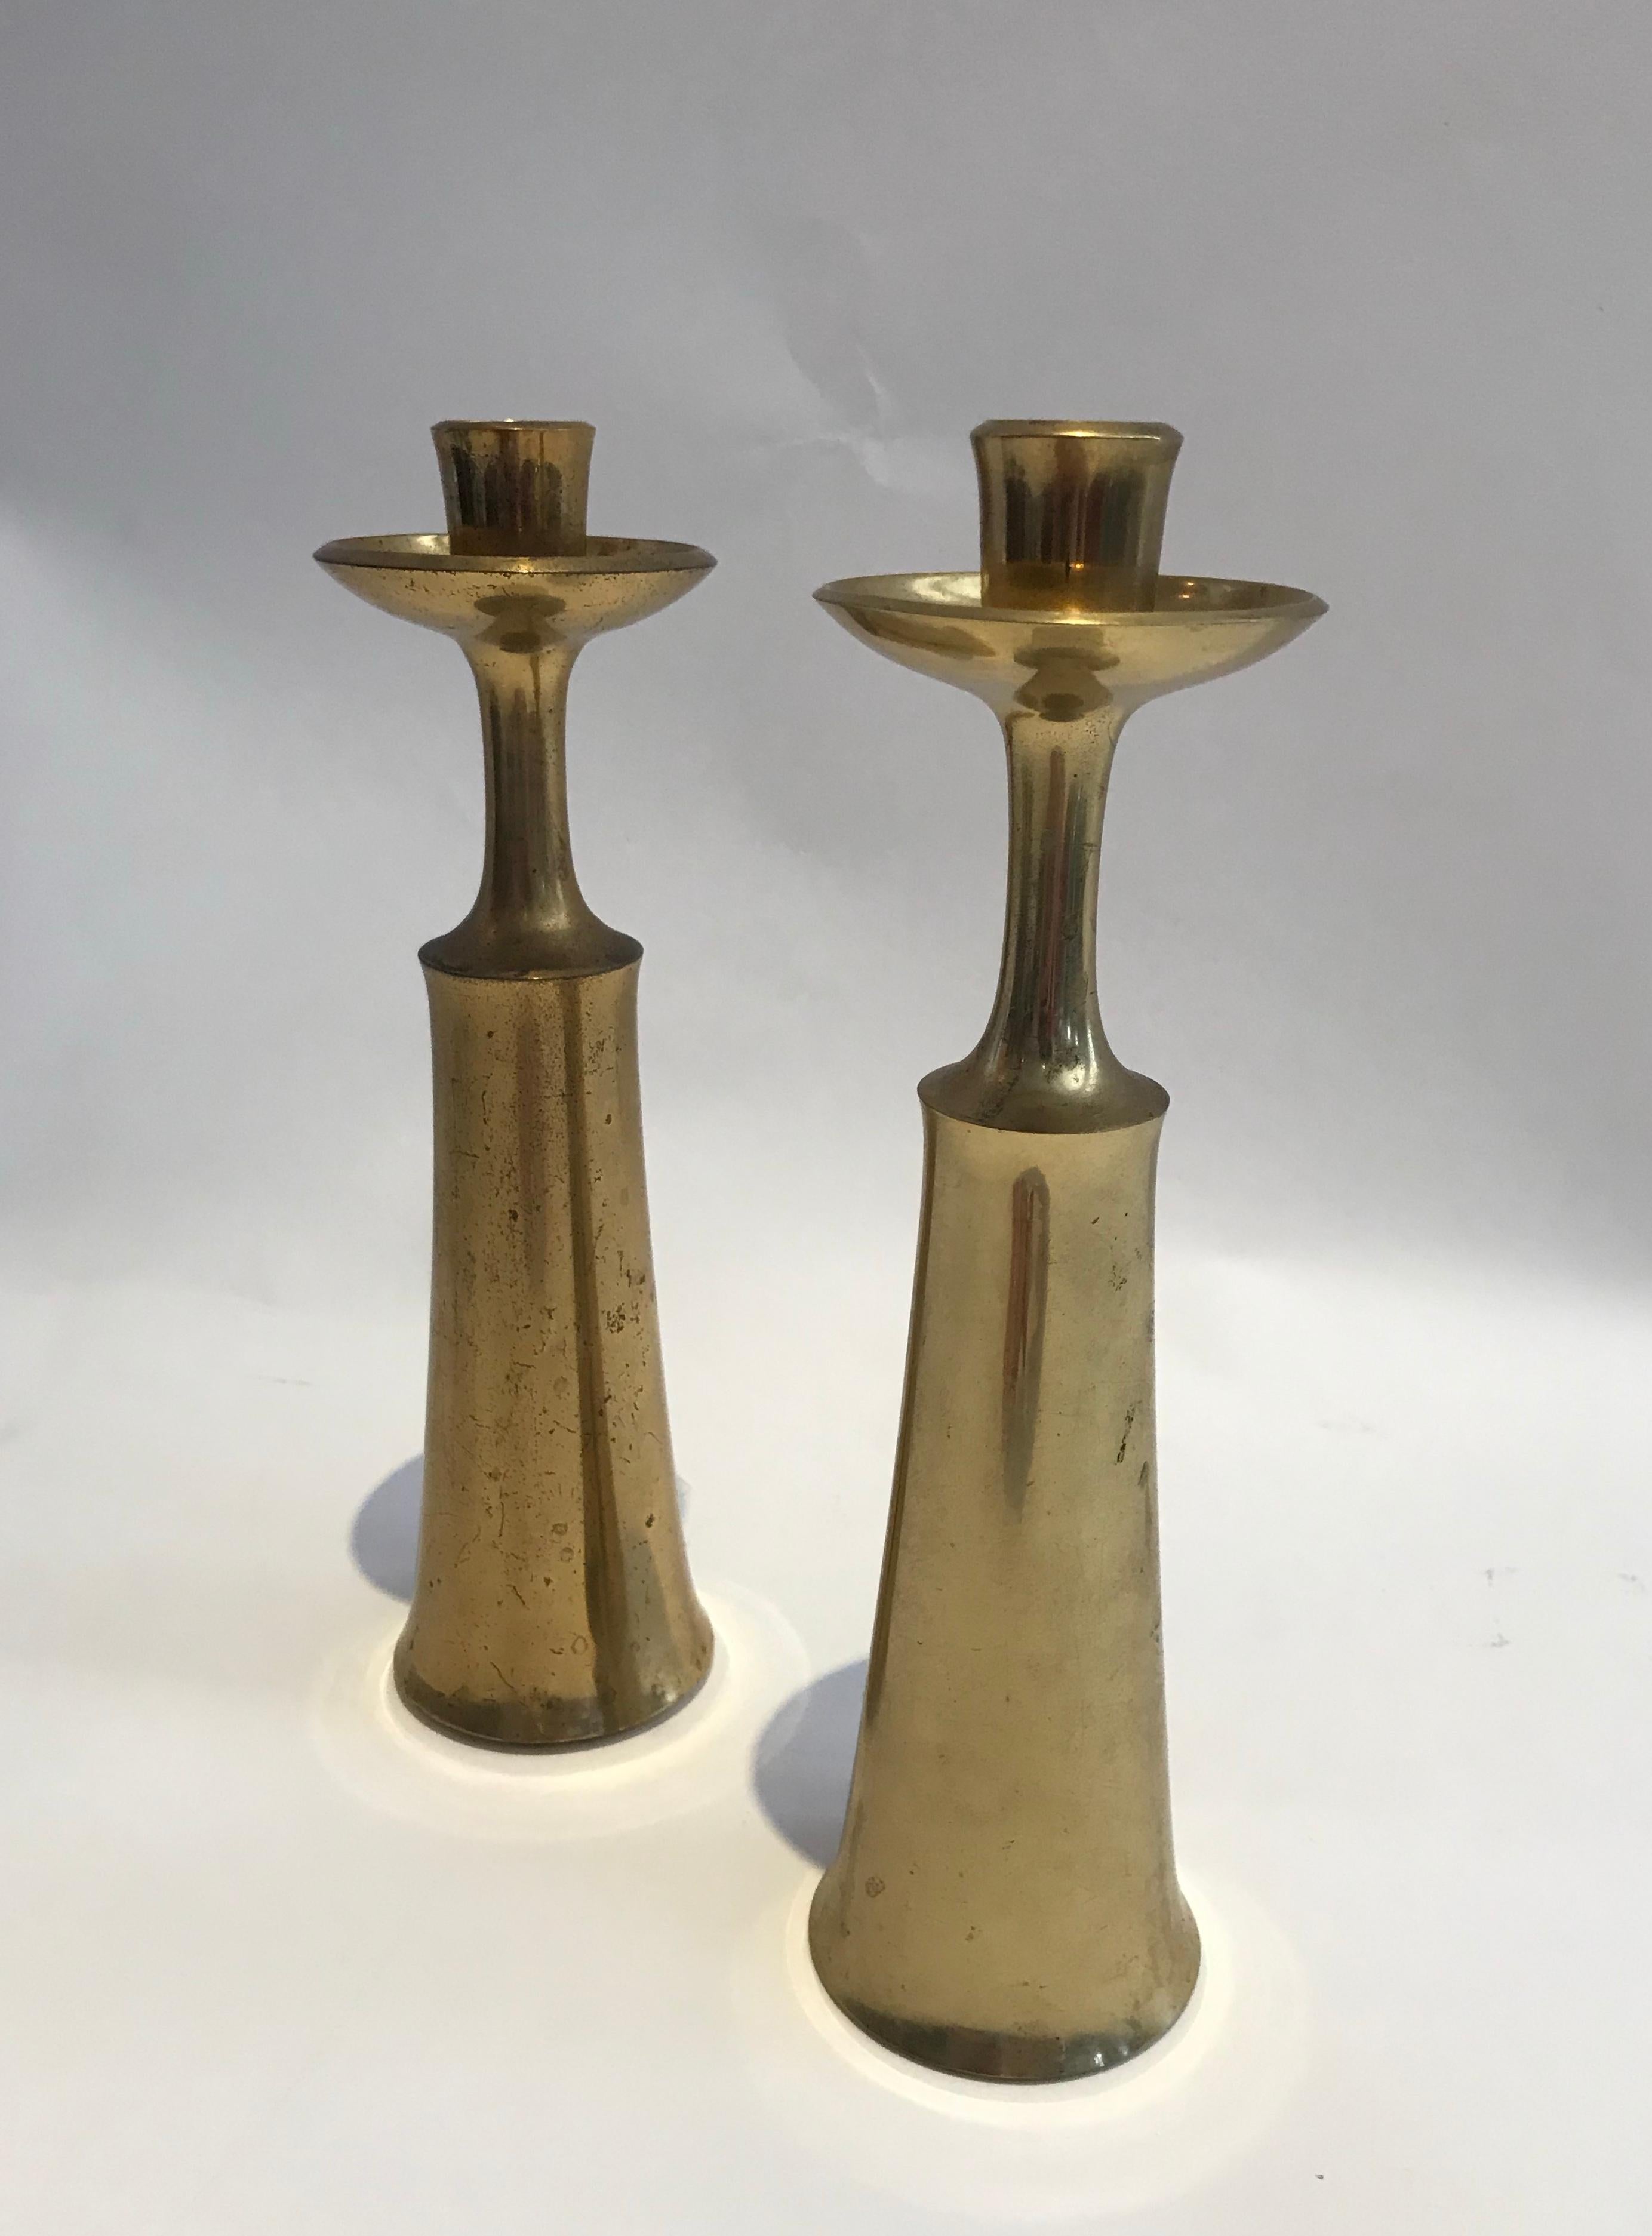 Jens Quistgaard brass candlesticks for Dansk. In good original condition with normal wear.